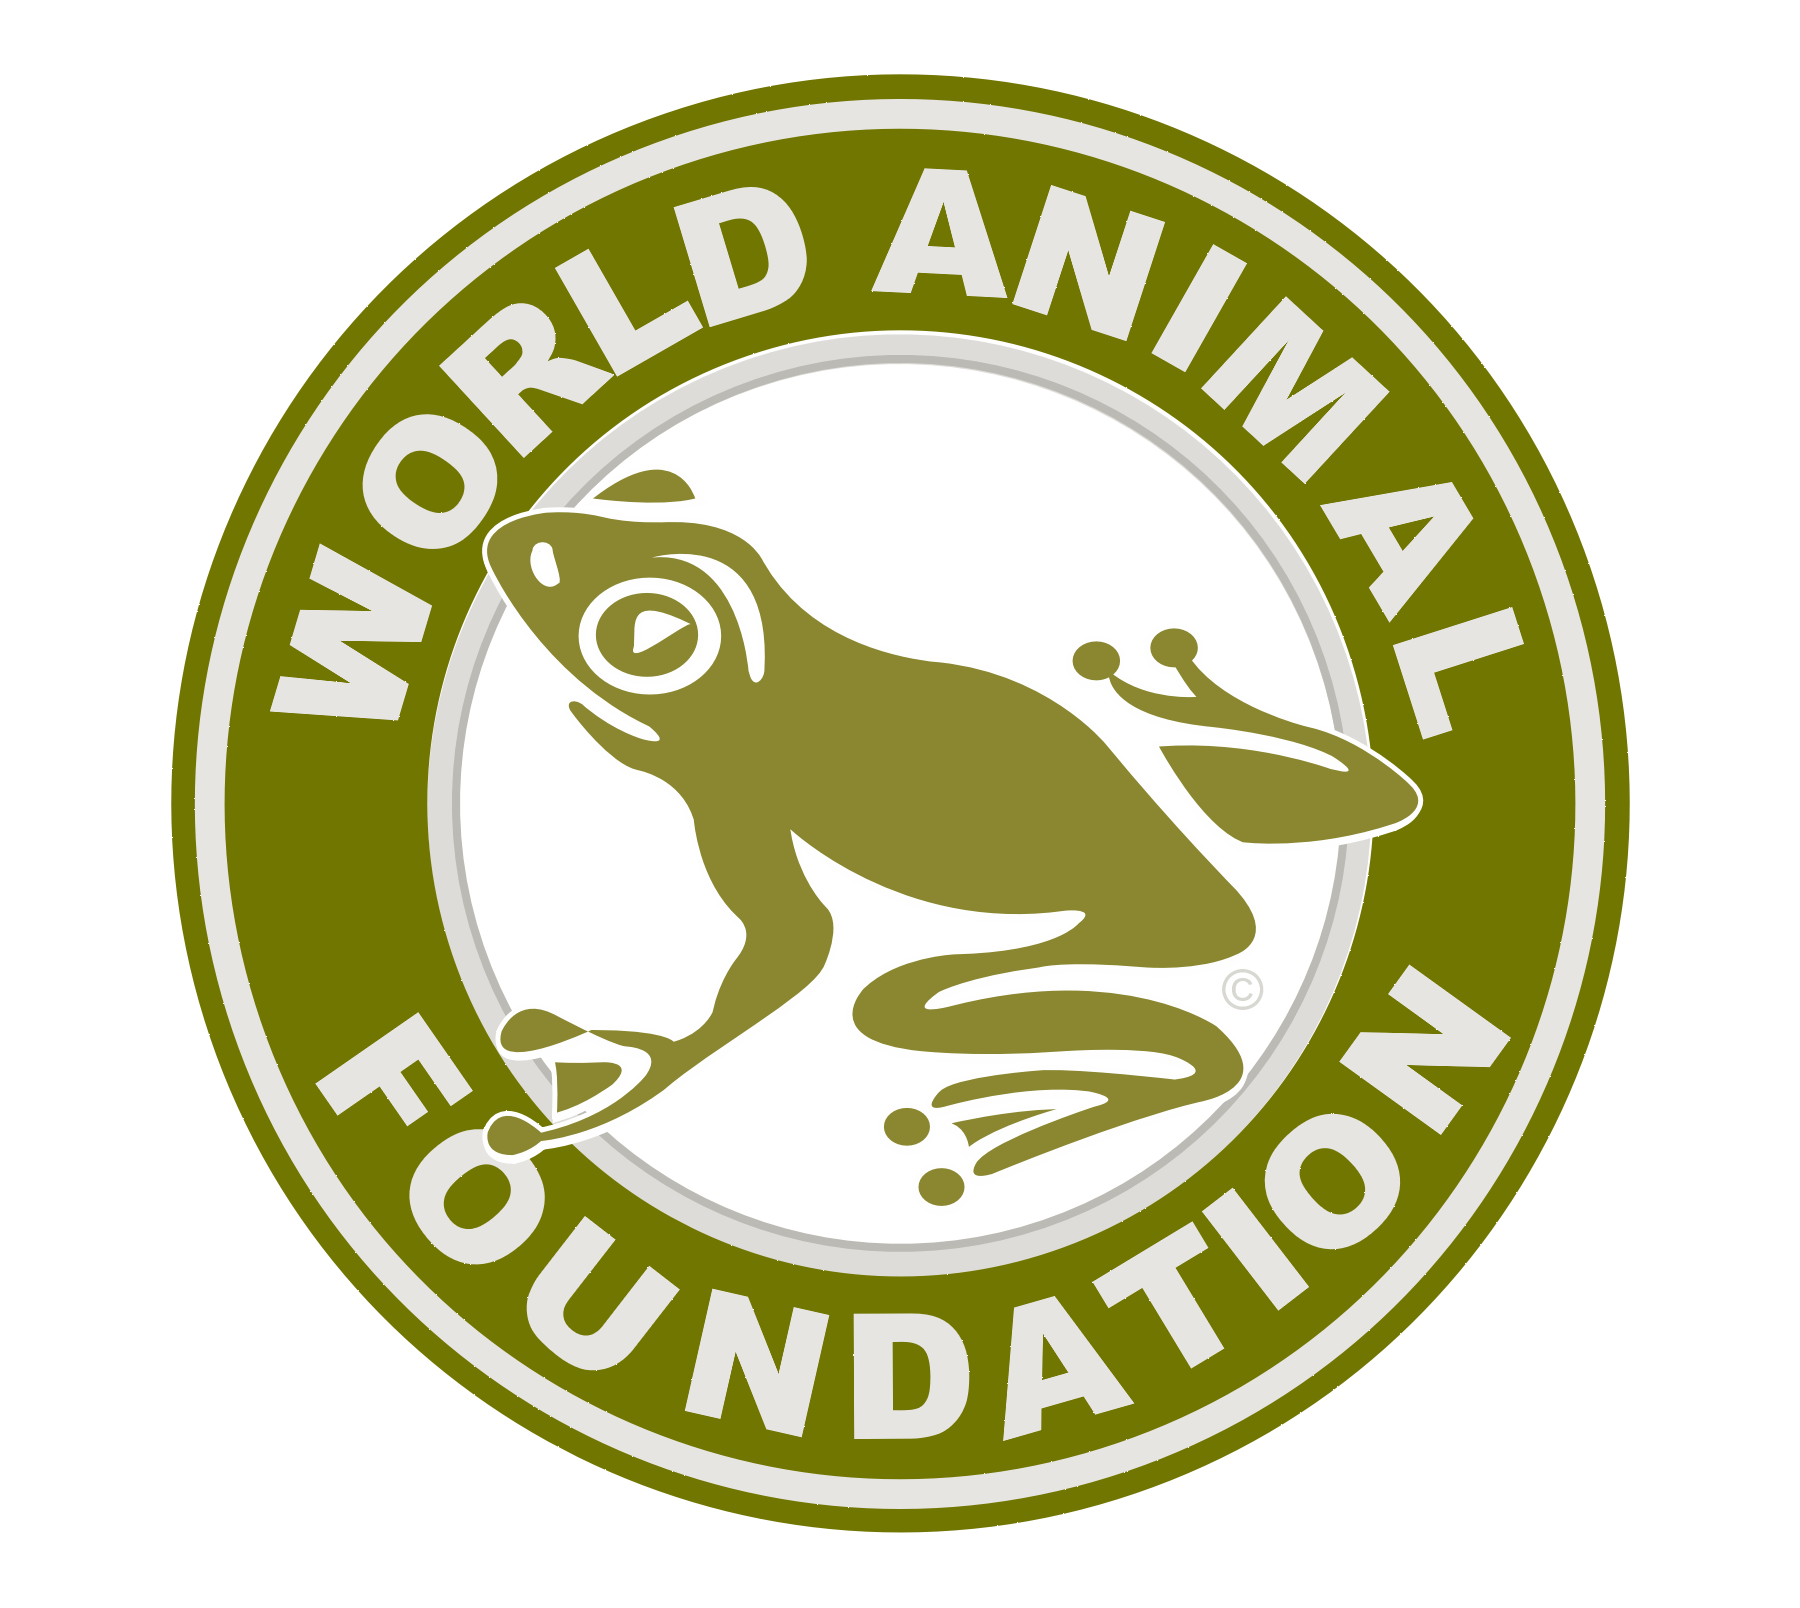 World Animal Foundation